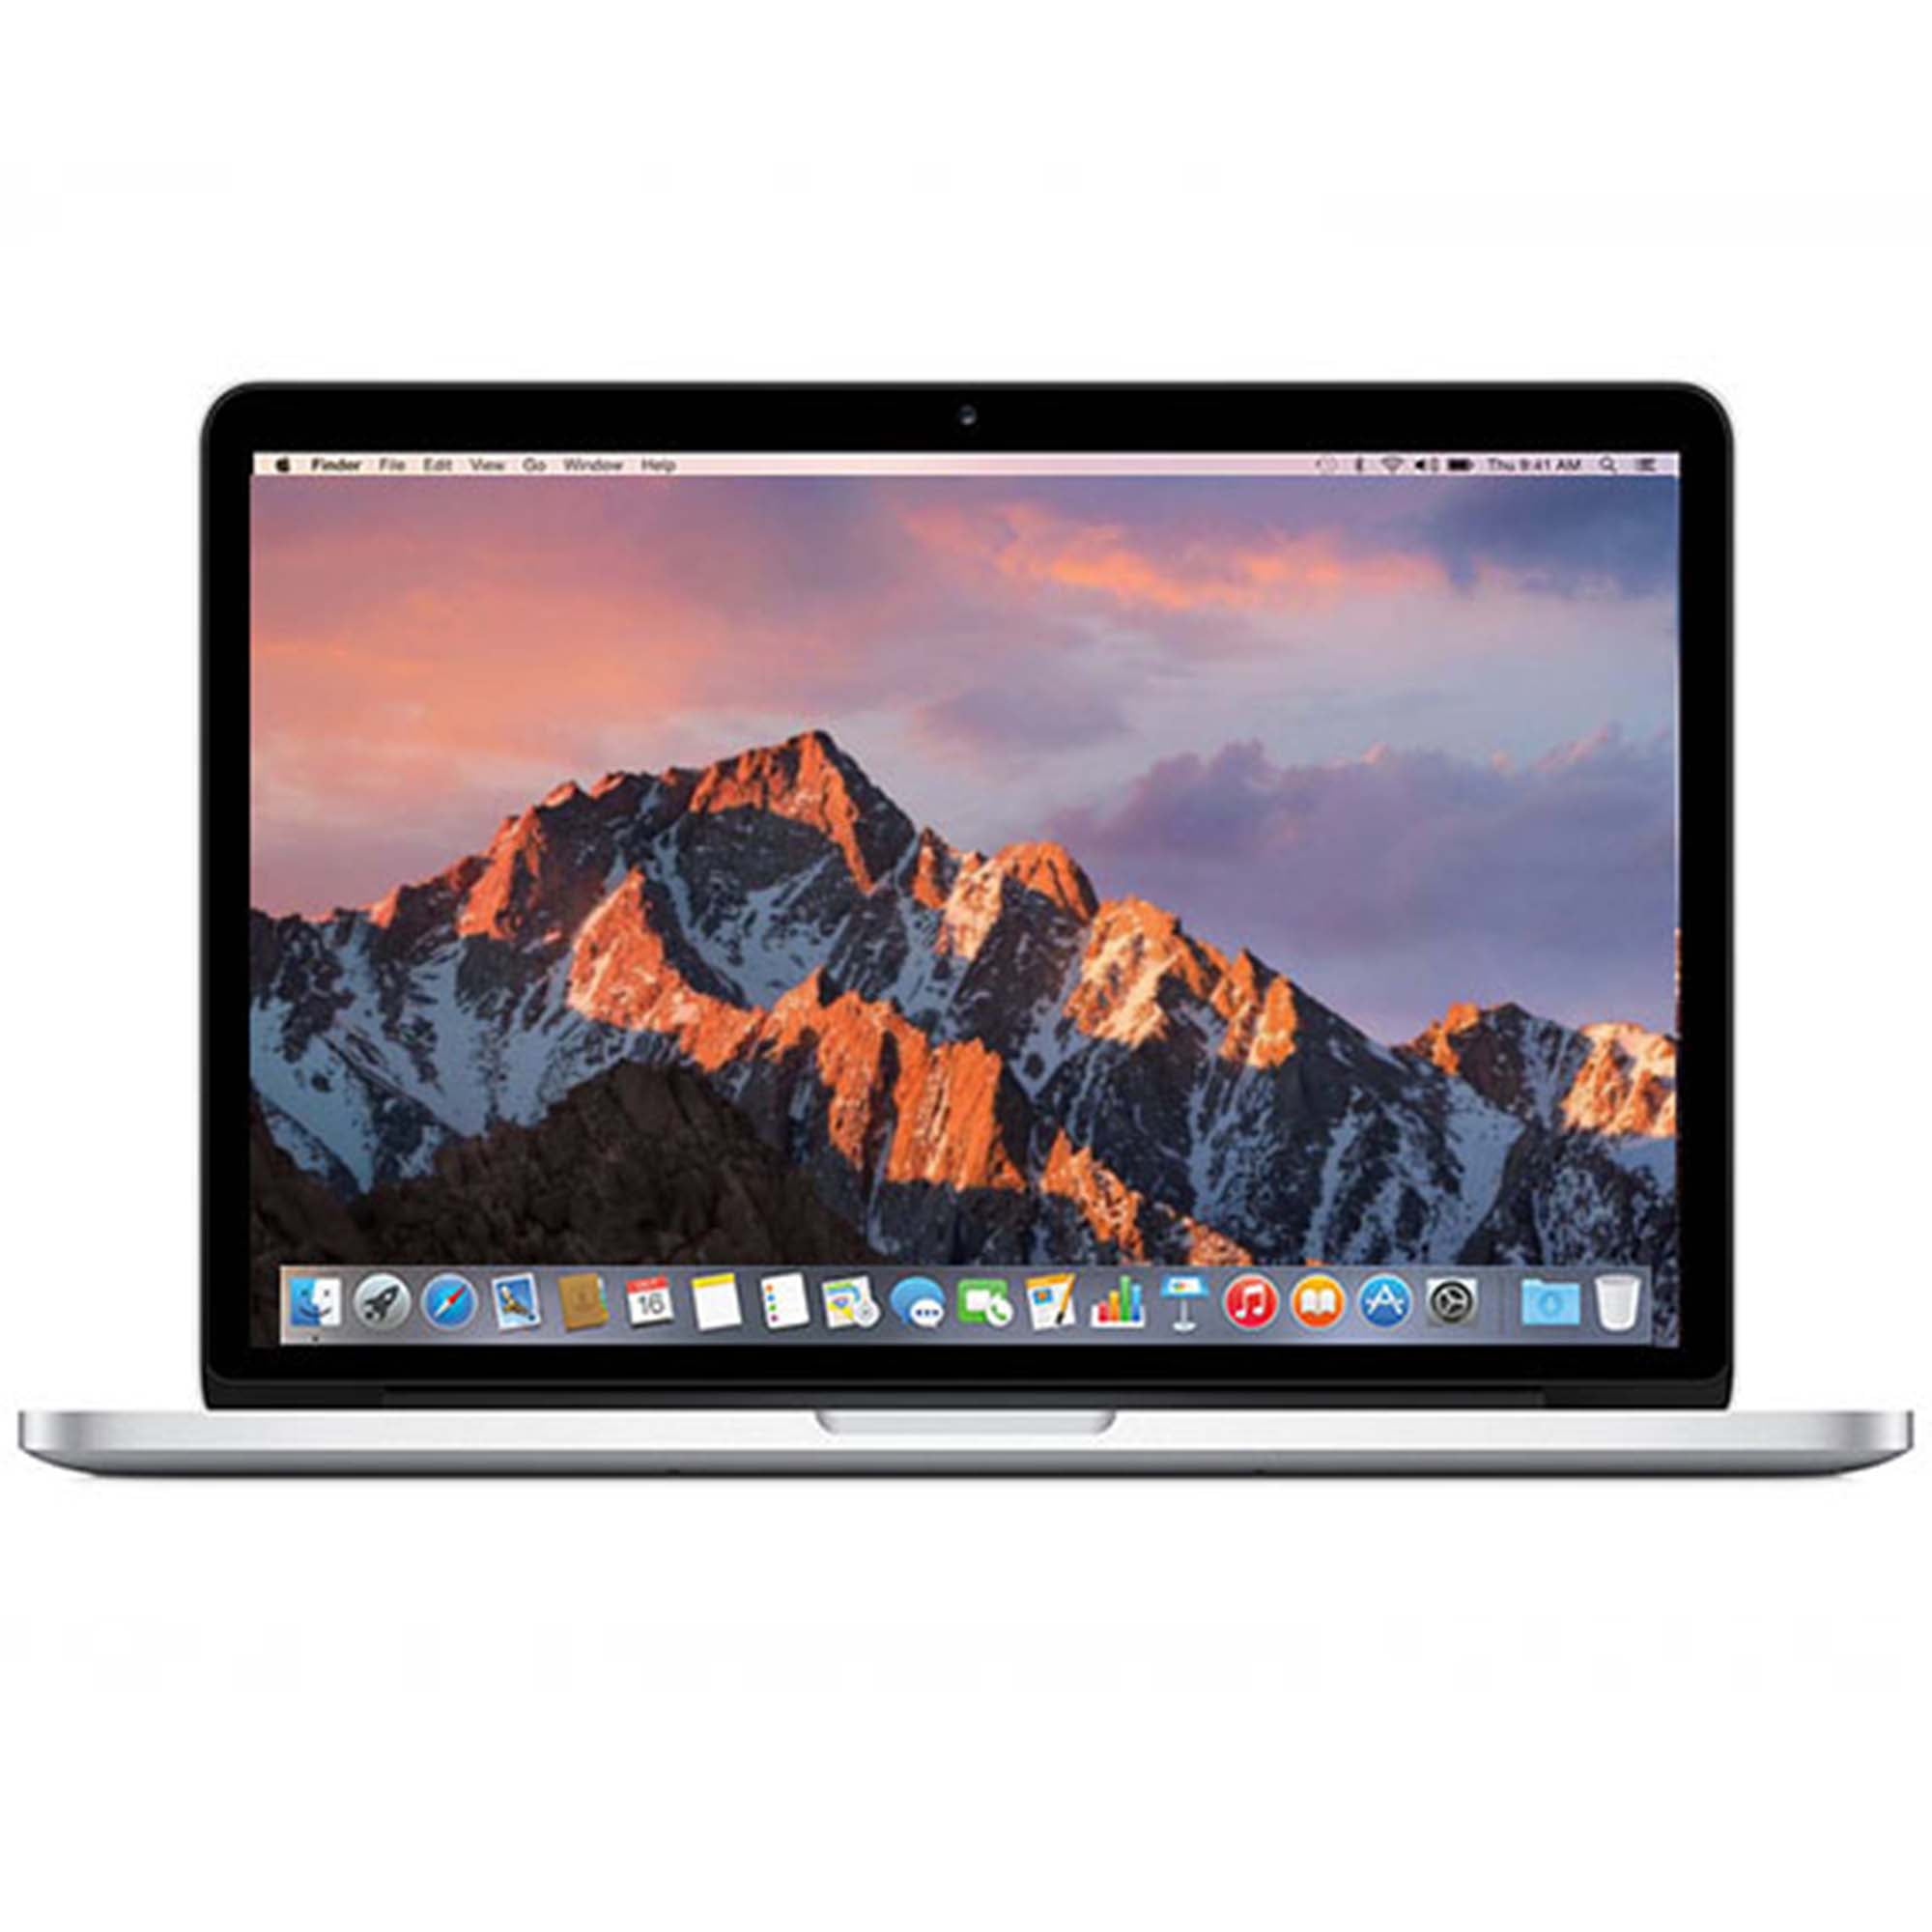 " Apple MacBook Pro Retina 3.1GHz Dual Core i7 GB Memory